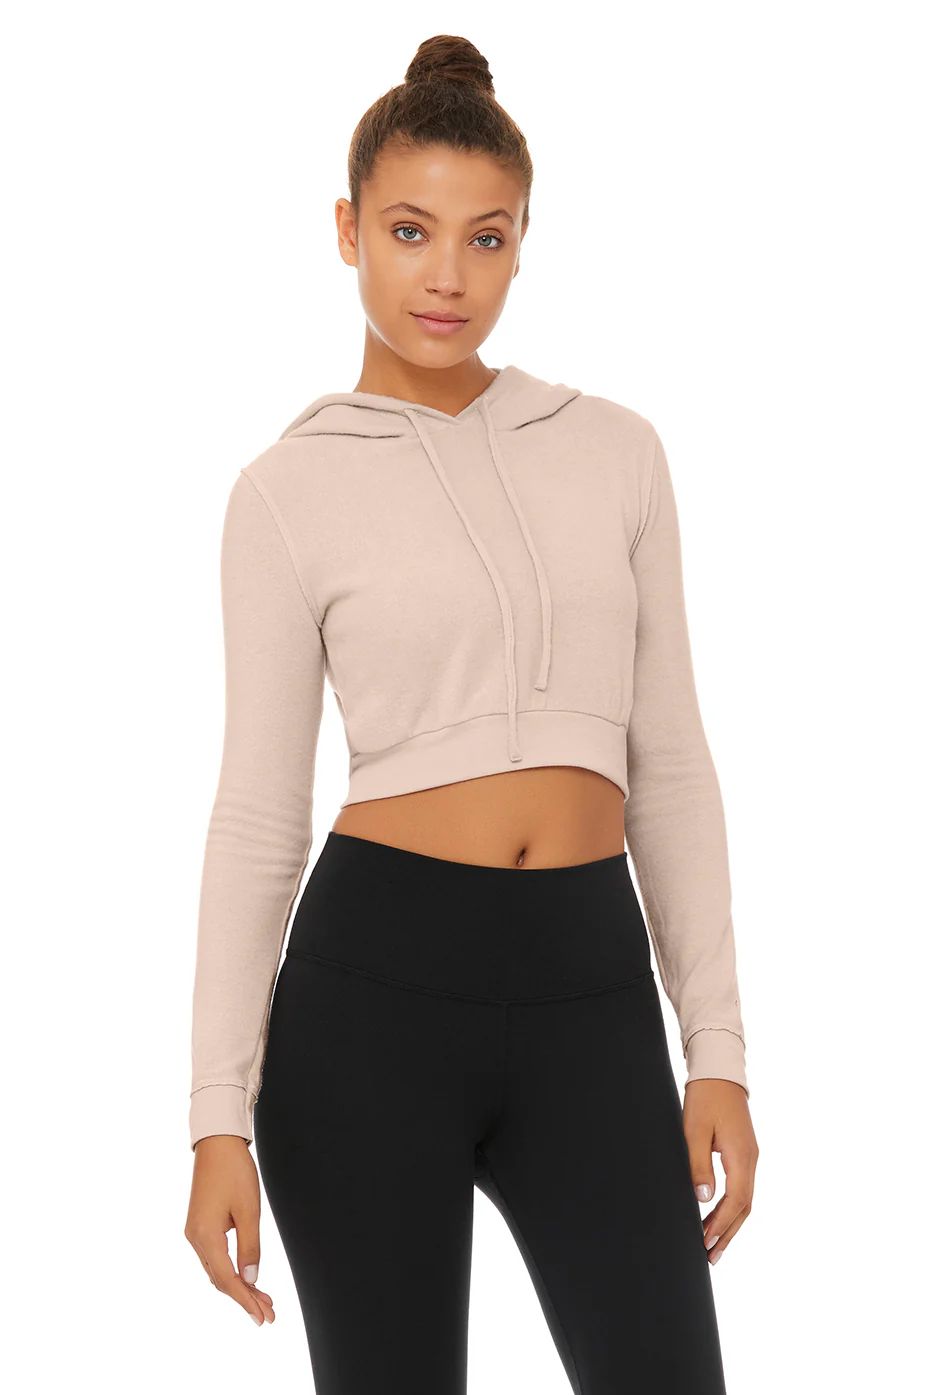 Alo Yoga Getaway Hoodie - Nectar Heather - Size XS - Brushed sweater Jersey | Alo Yoga